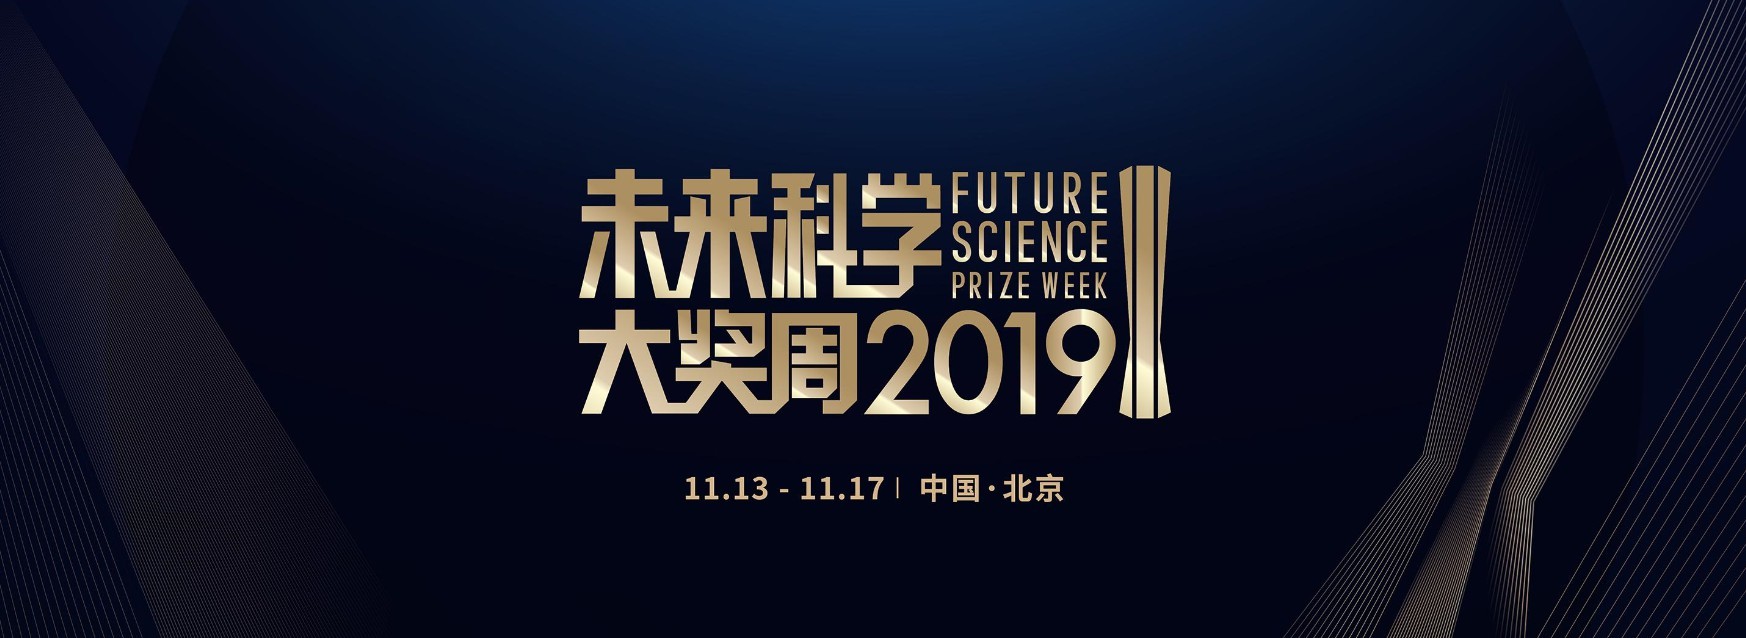 2019 Future Science Prize Week